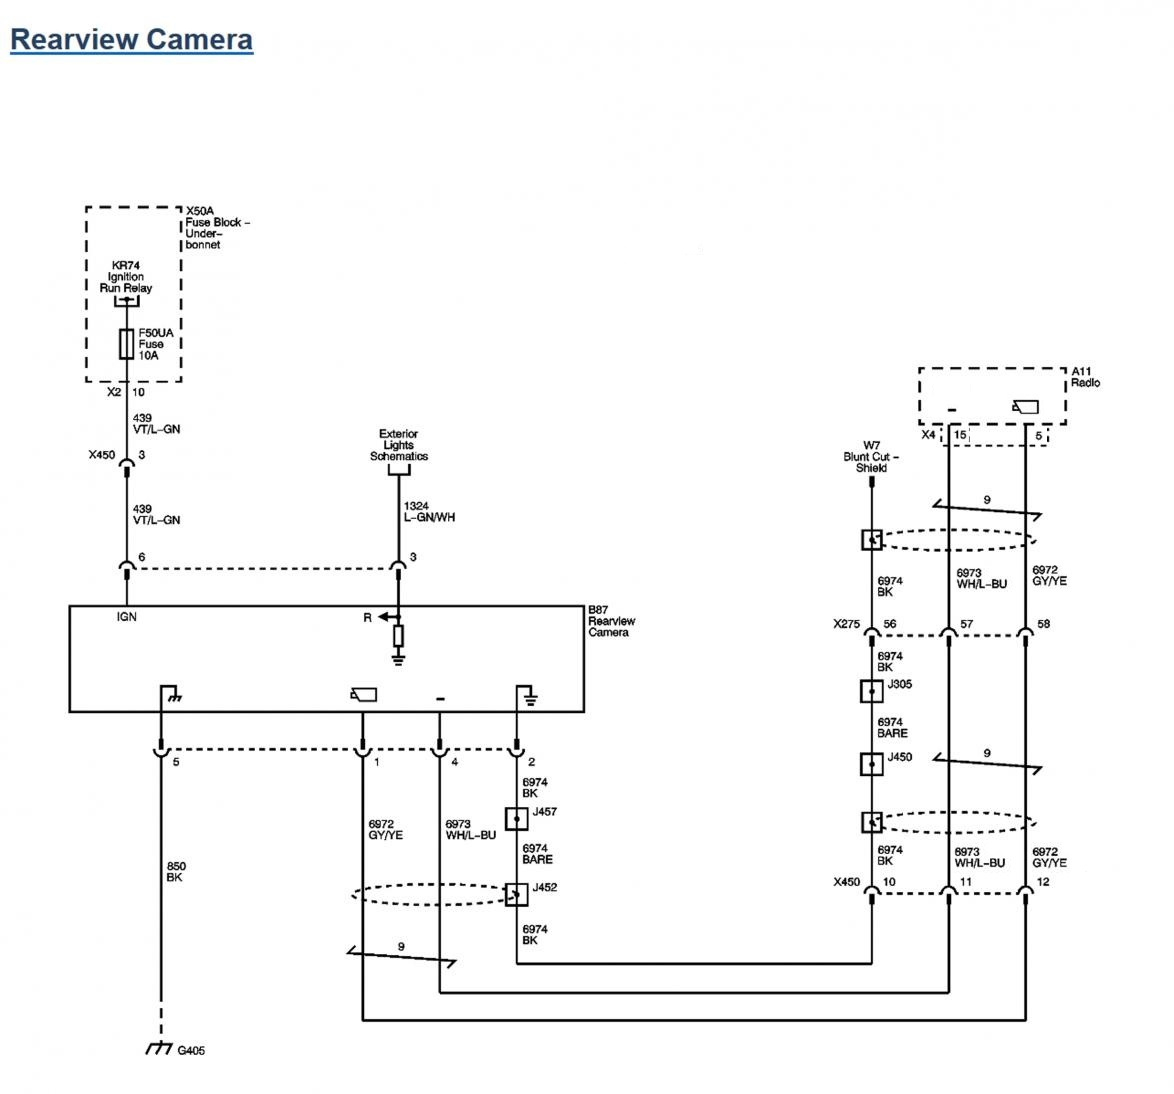 Backup Camera Wire Diagram | Wiring Diagram - Gm Backup Camera Wiring Diagram